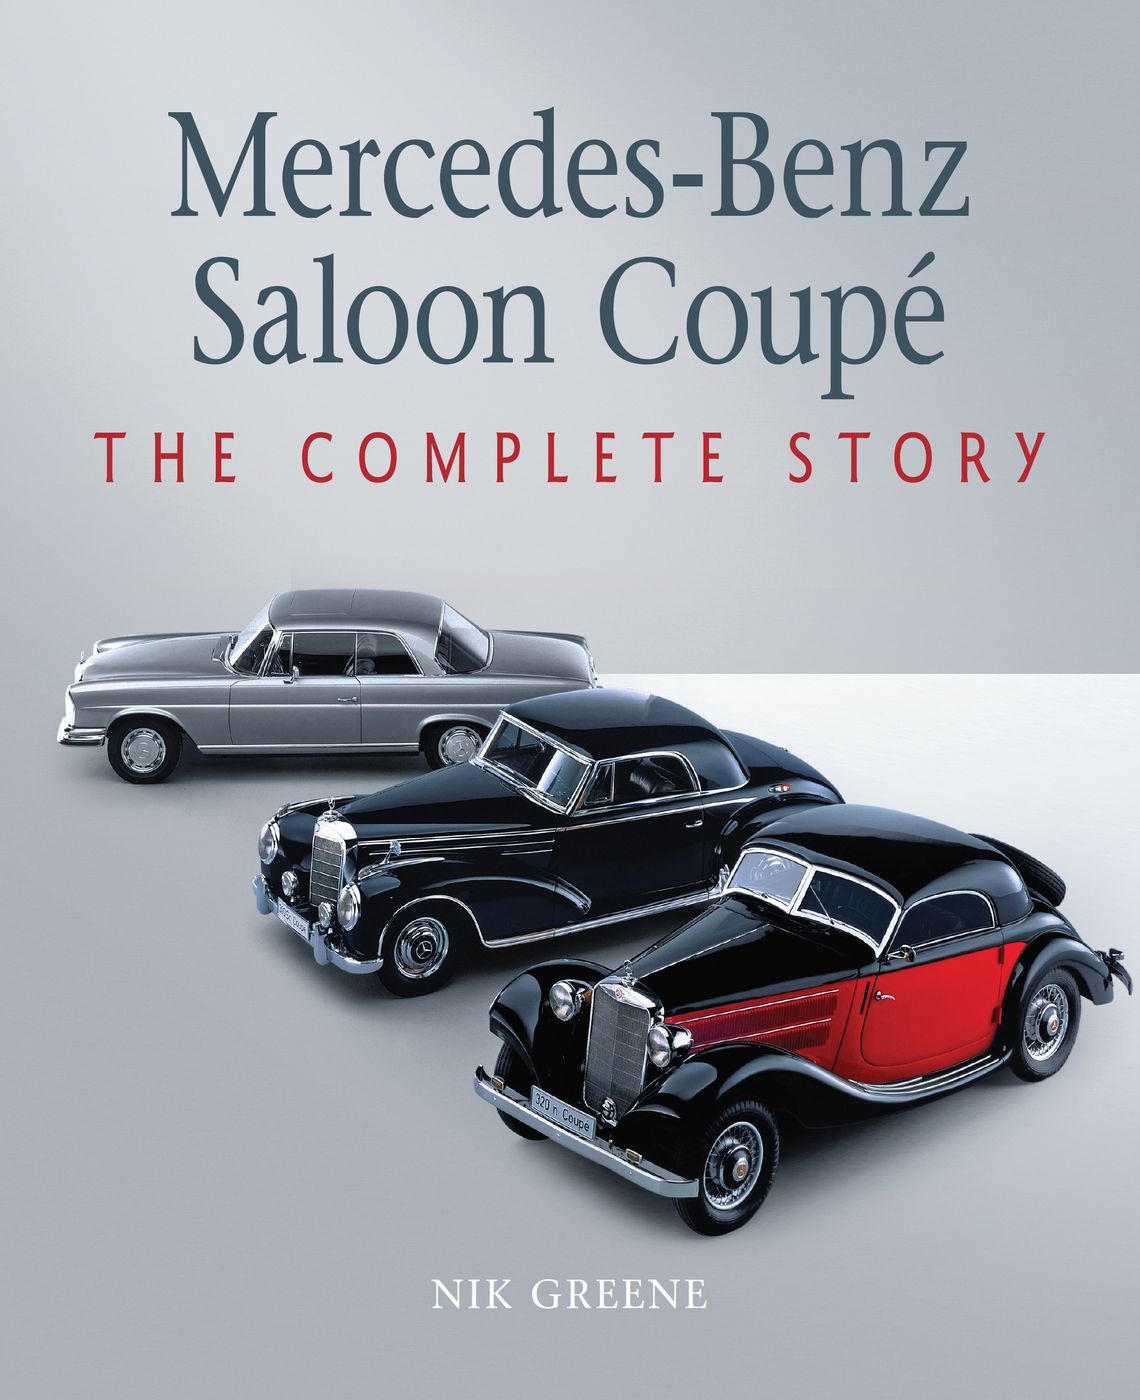 Mercedes-Benz Saloon Coupe
Mercedes-Benz Saloon Coupe
Mercedes-B